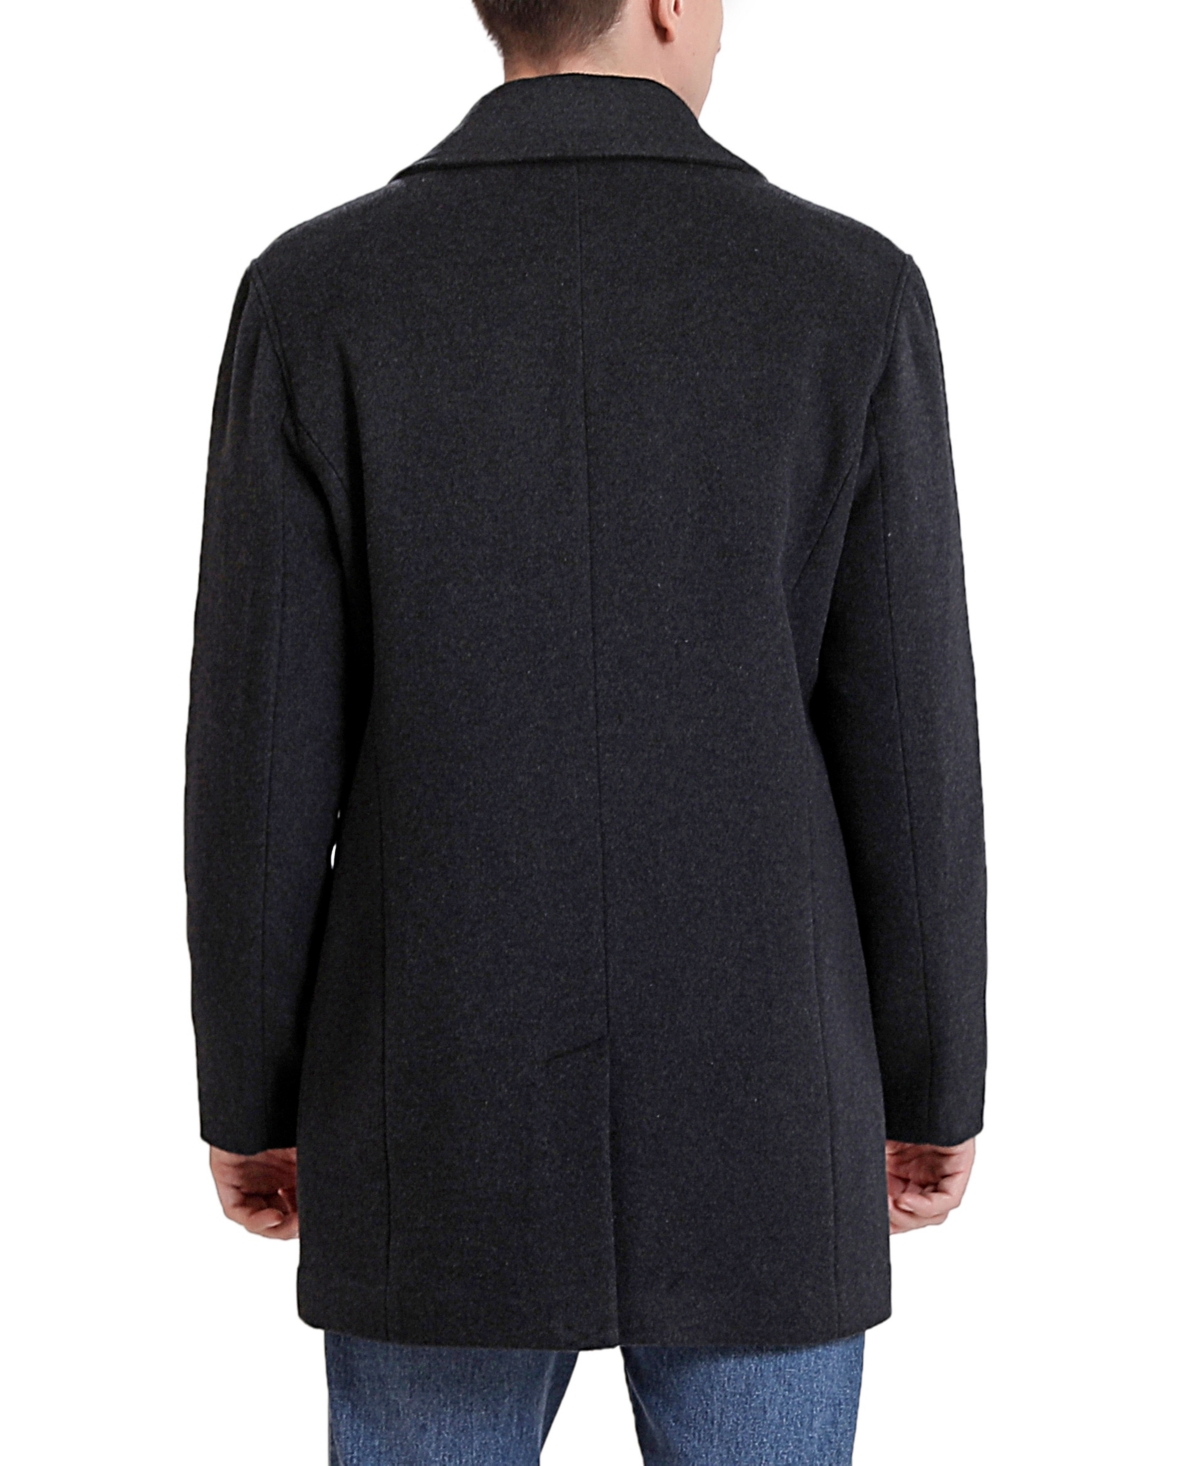 Bgsd Men Justin Wool Blend Car Coat - Tall - Black | Smart Closet